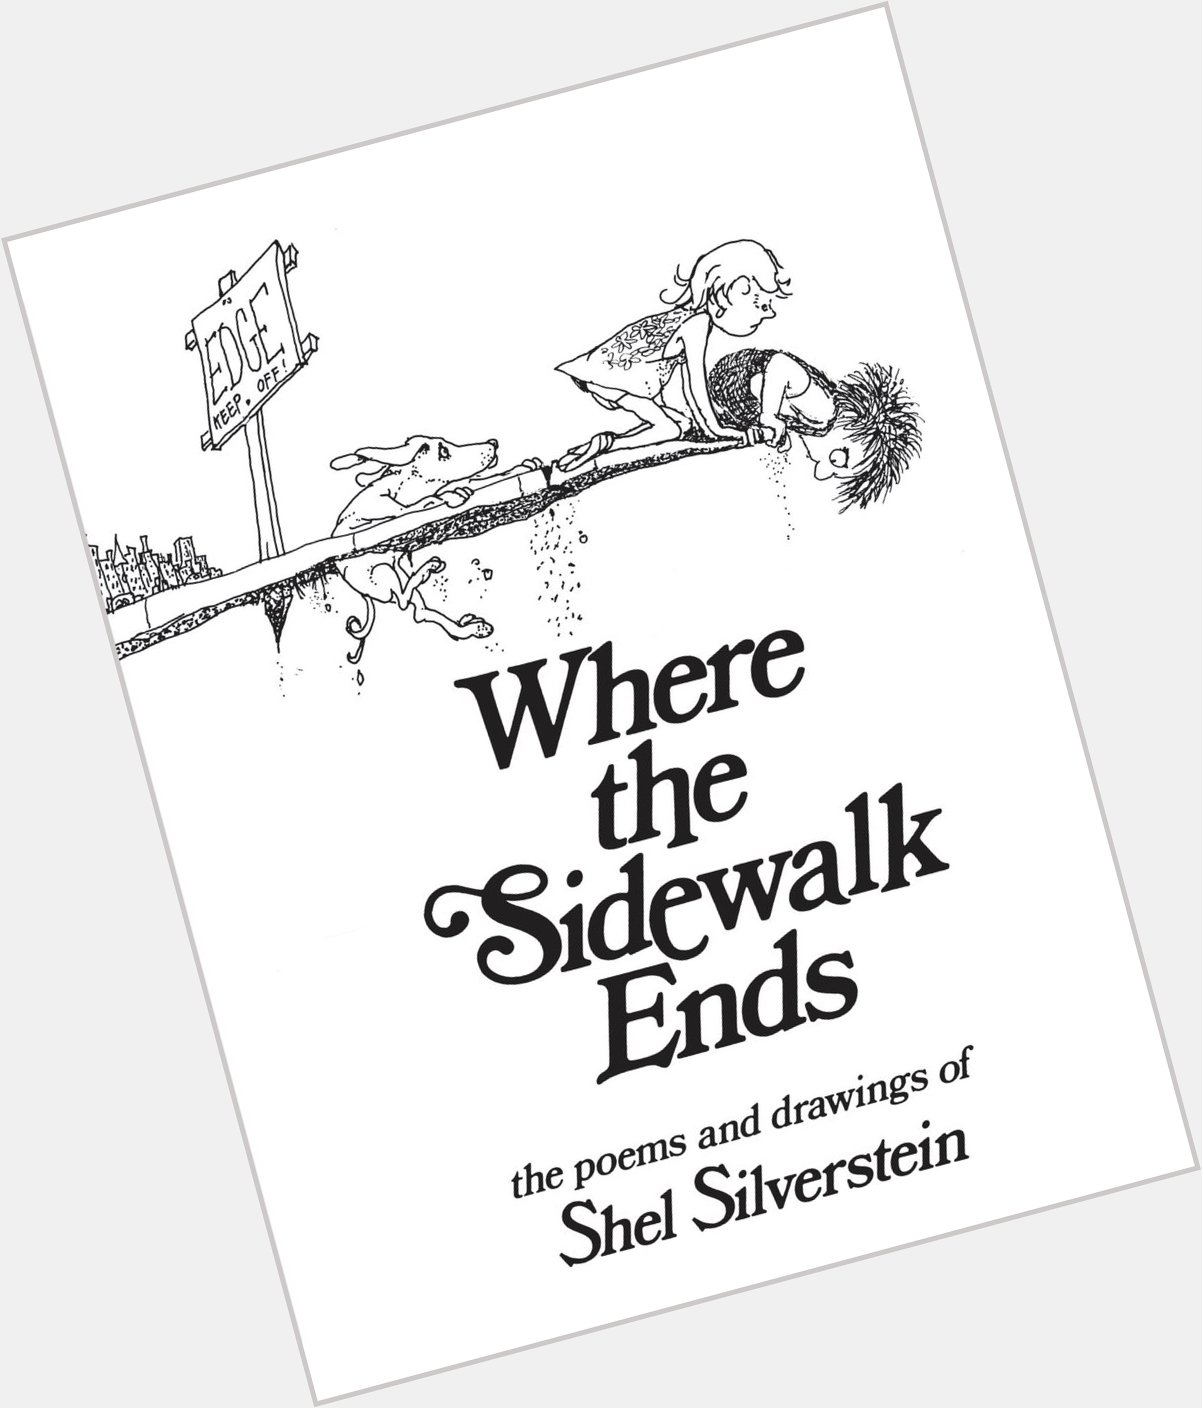 October 18, 1932: Happy birthday children s poet Shel Silverstein 